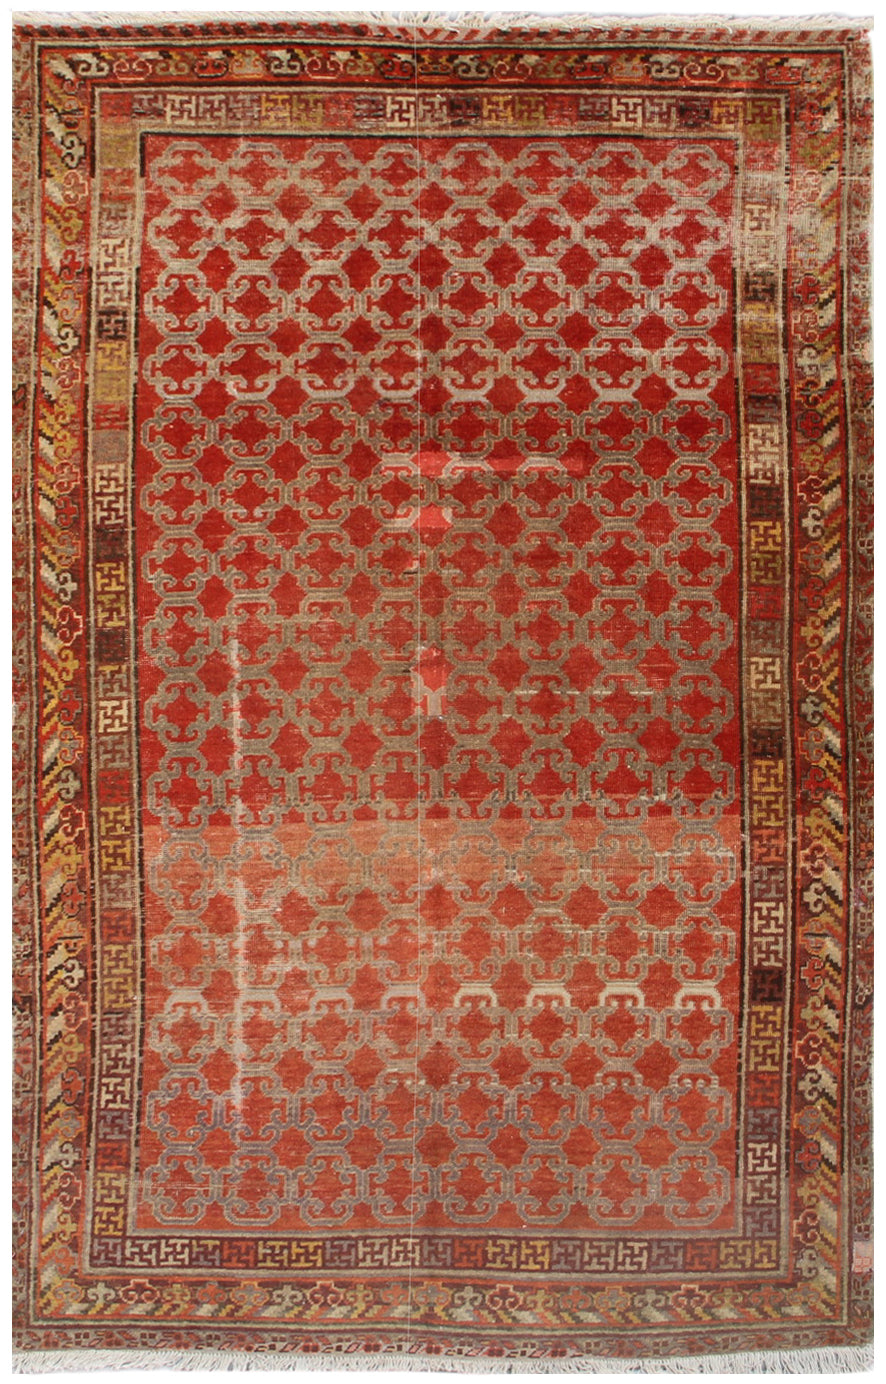 8.03 x 4.10 Antique Samarkand